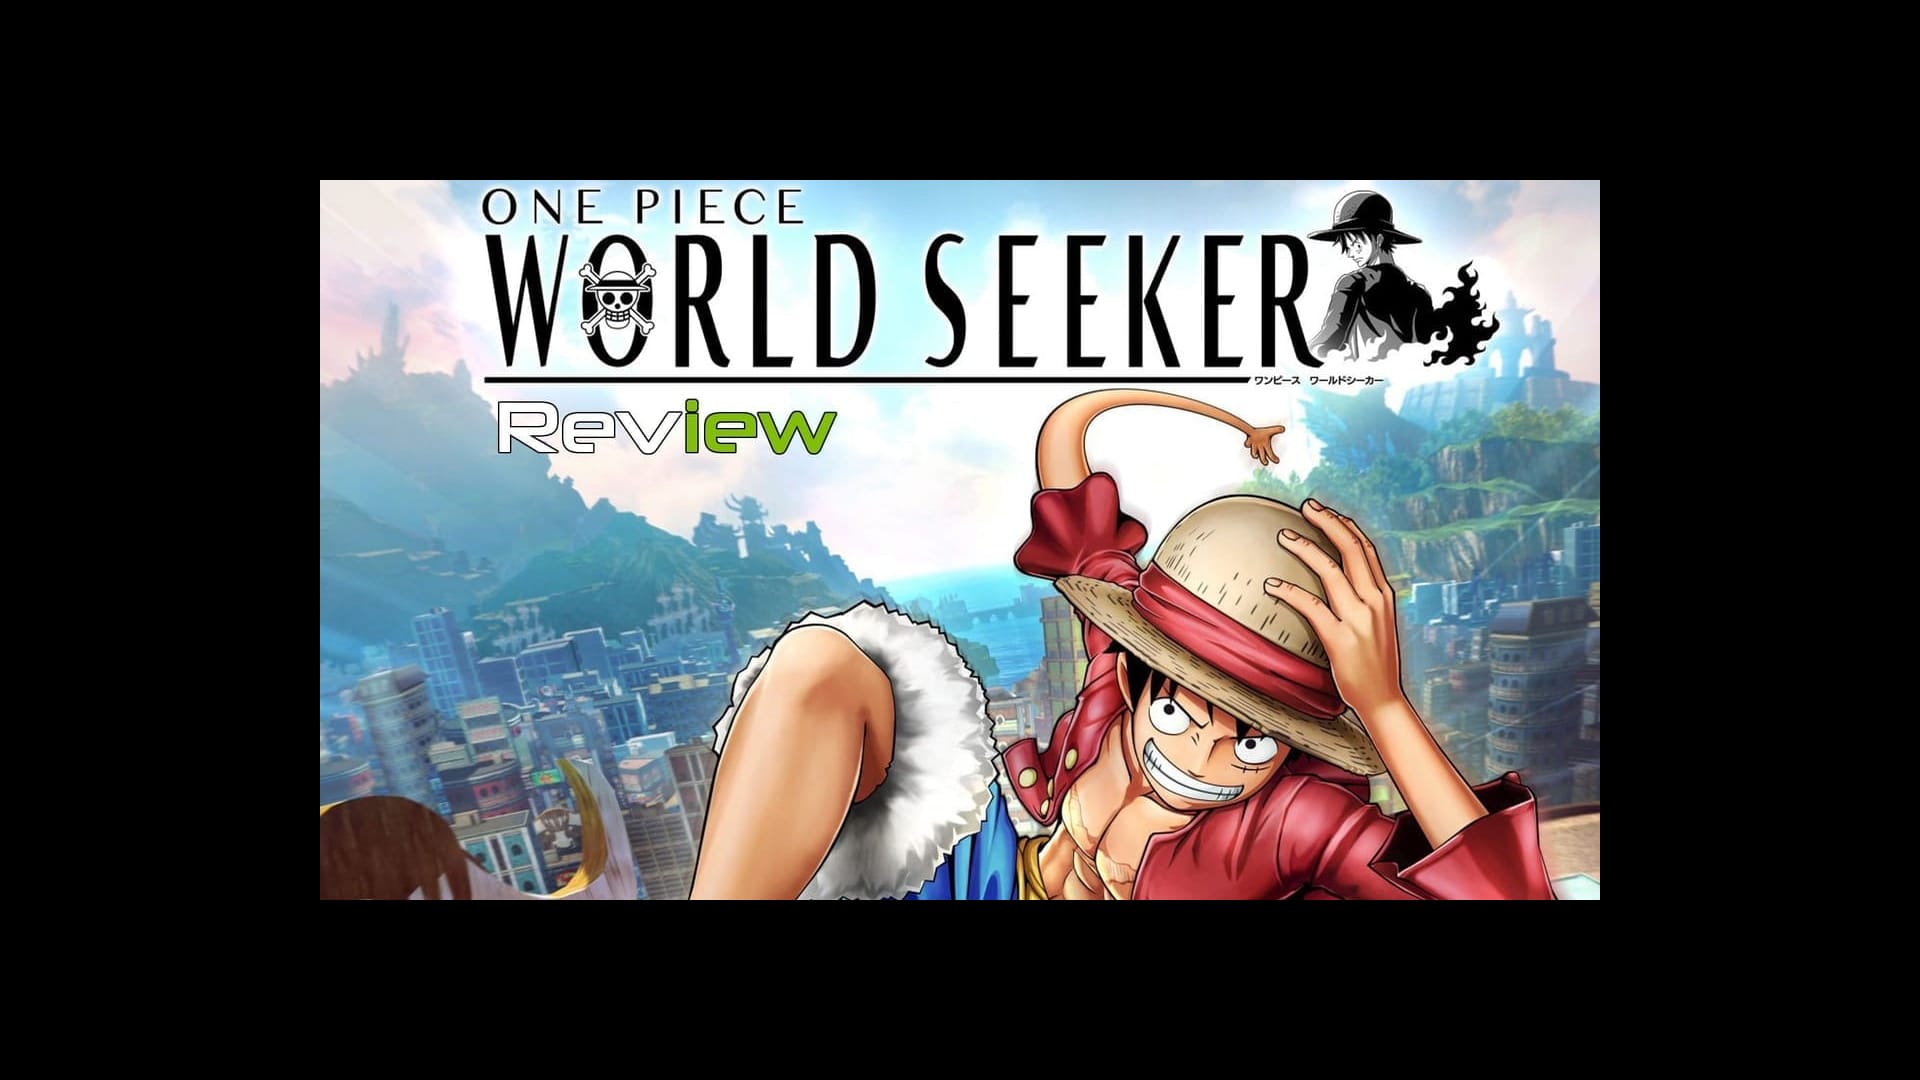 One Piece World Seeker Review: Lost treasure